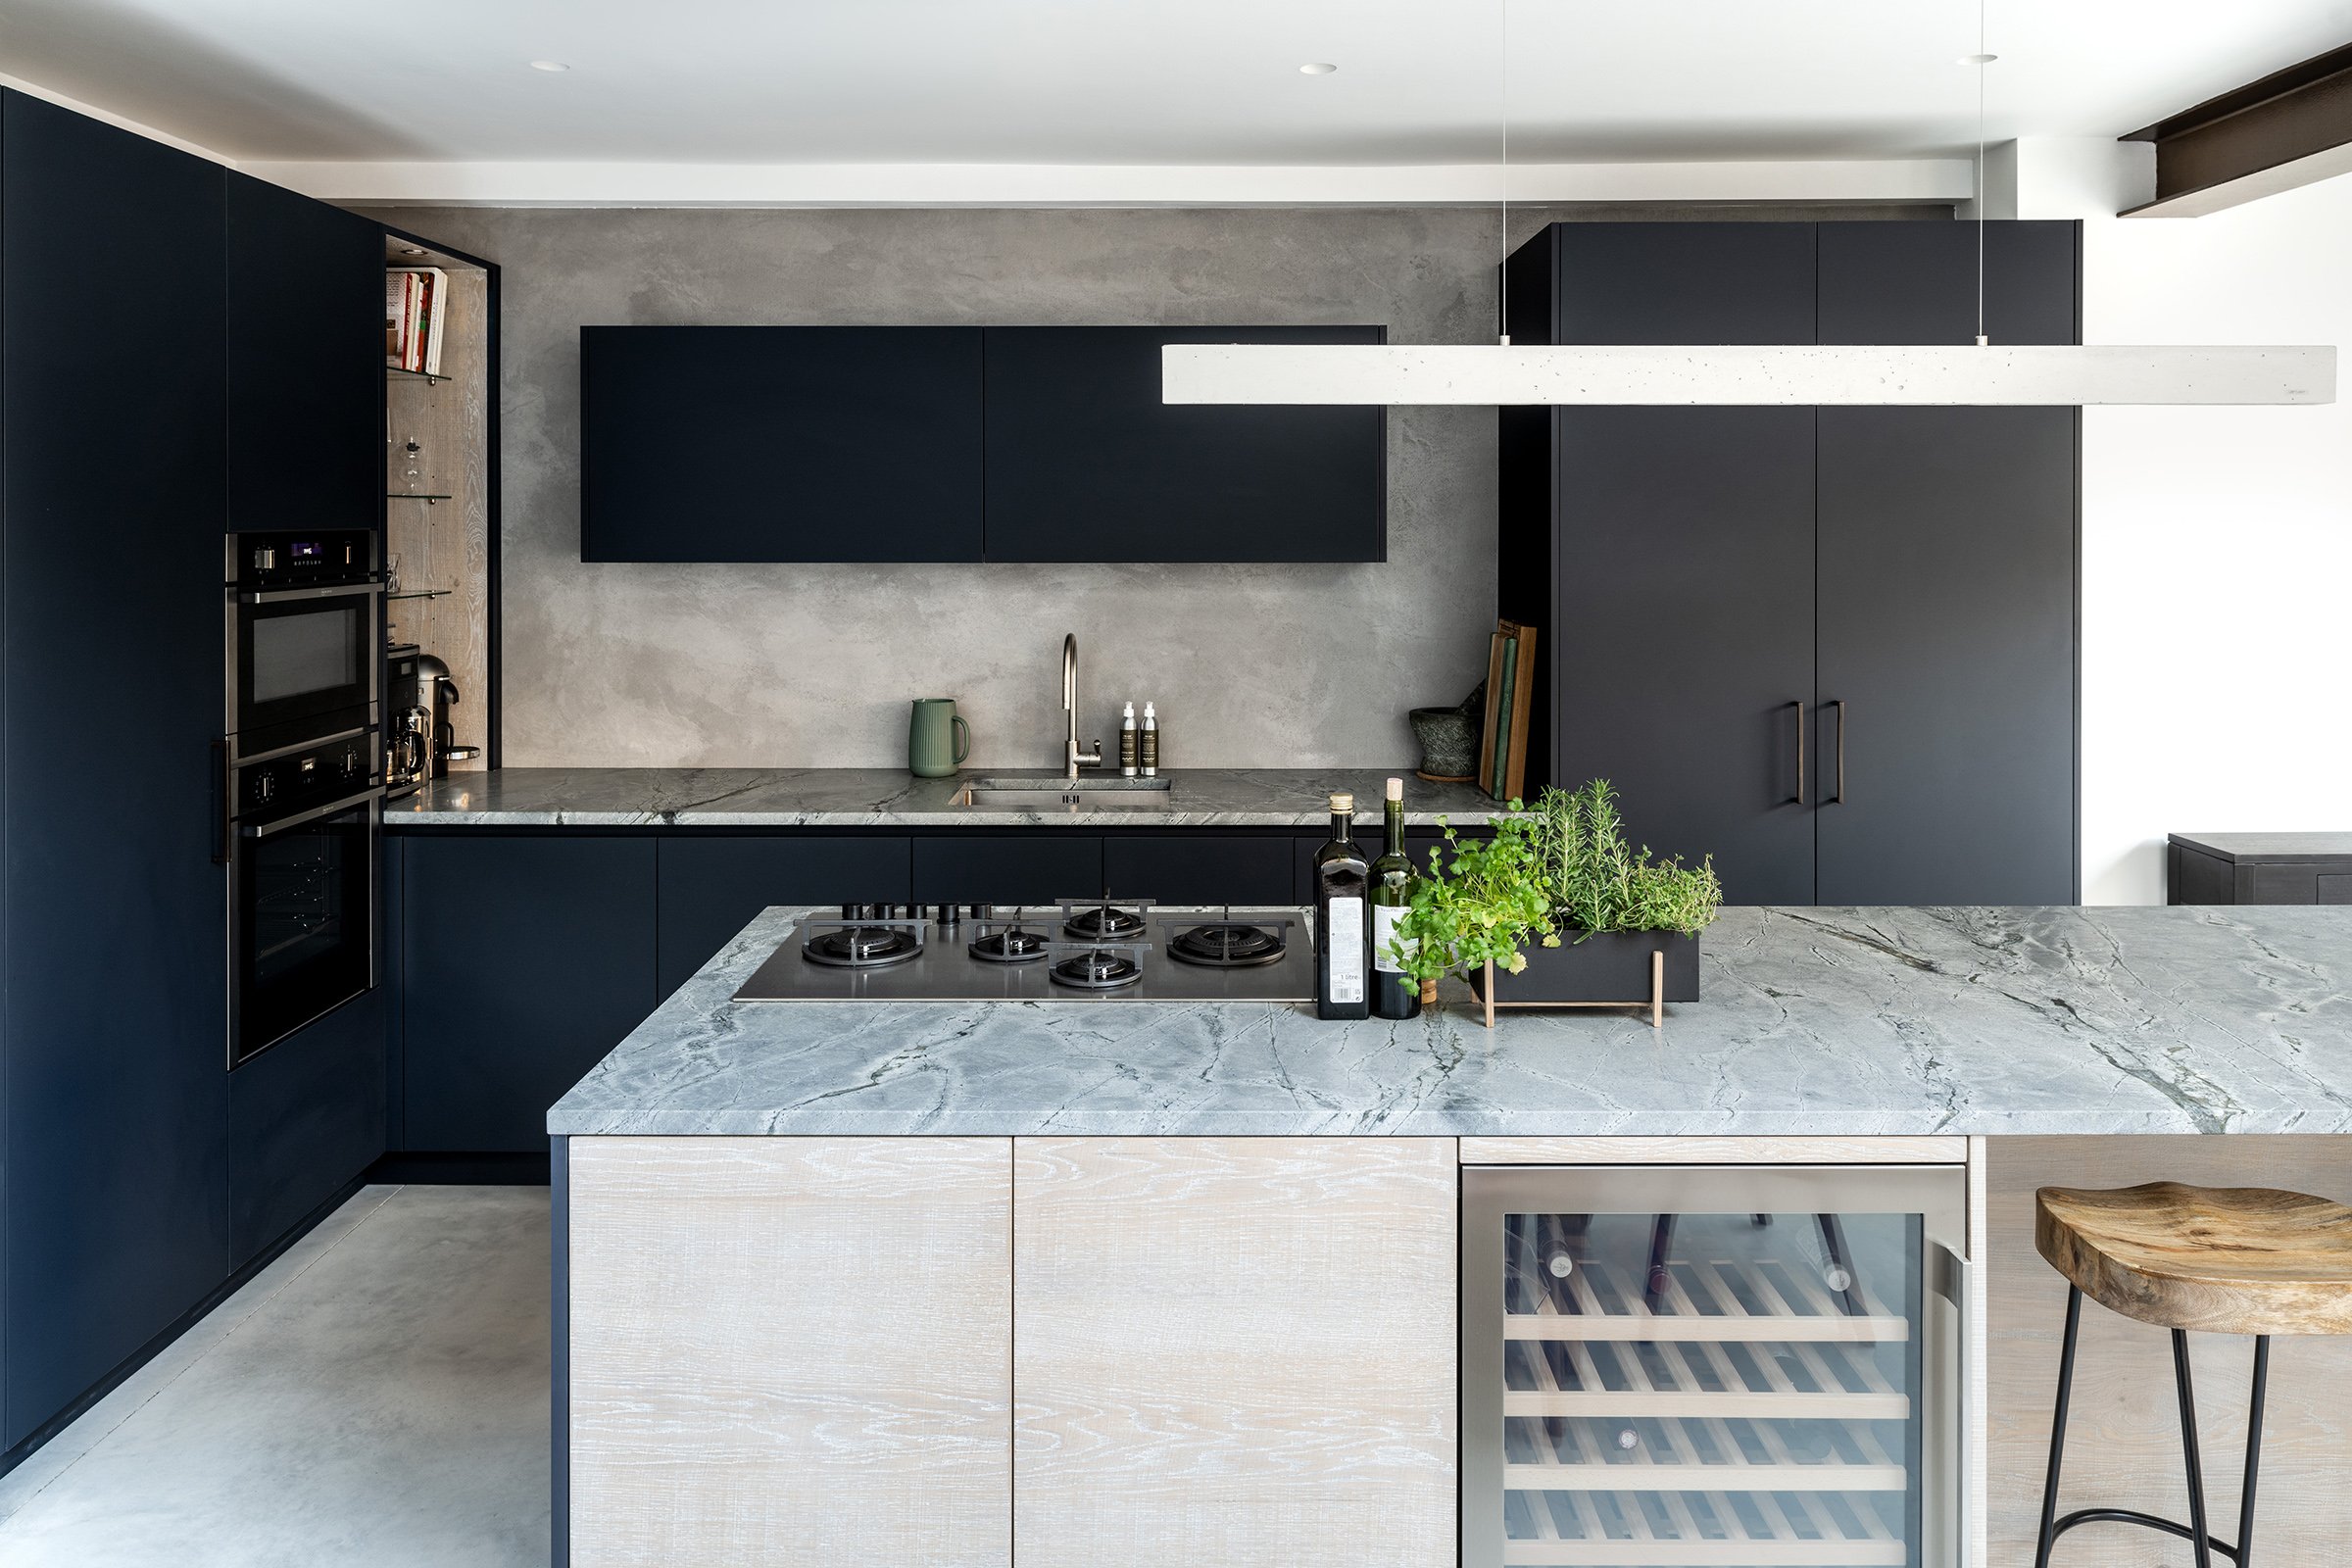 6-mcdowall-road-kitchen-extension-interior-design-architecture-london-uk-rider-stirland-architects.jpg